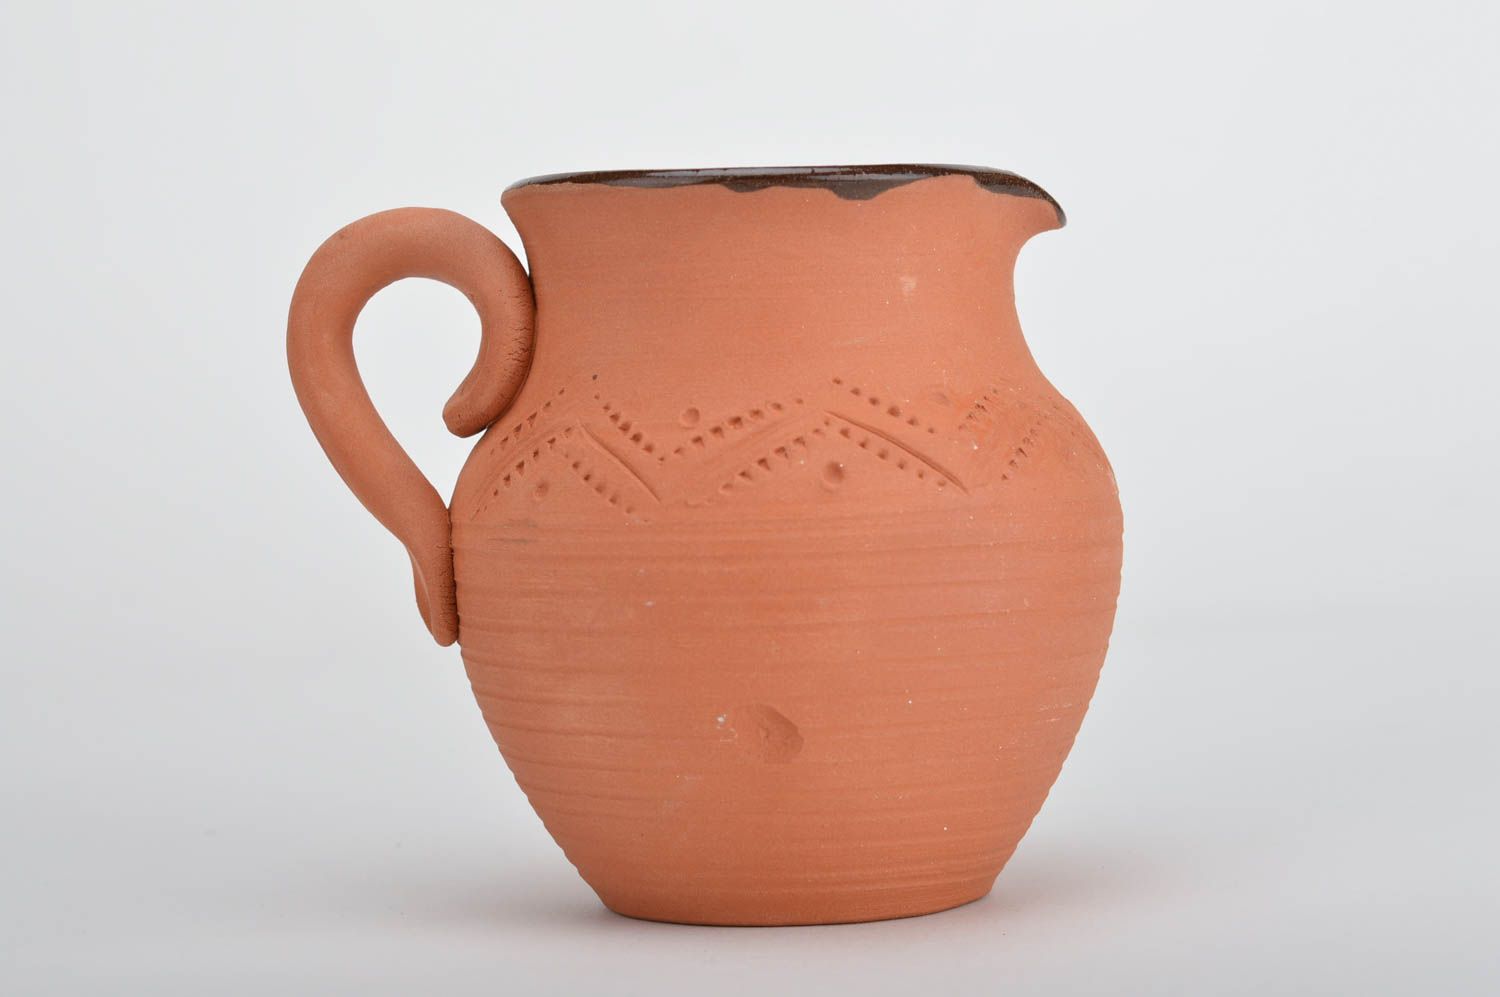 12 oz ceramic glazed creamer jug with handle 0,1 lb photo 1